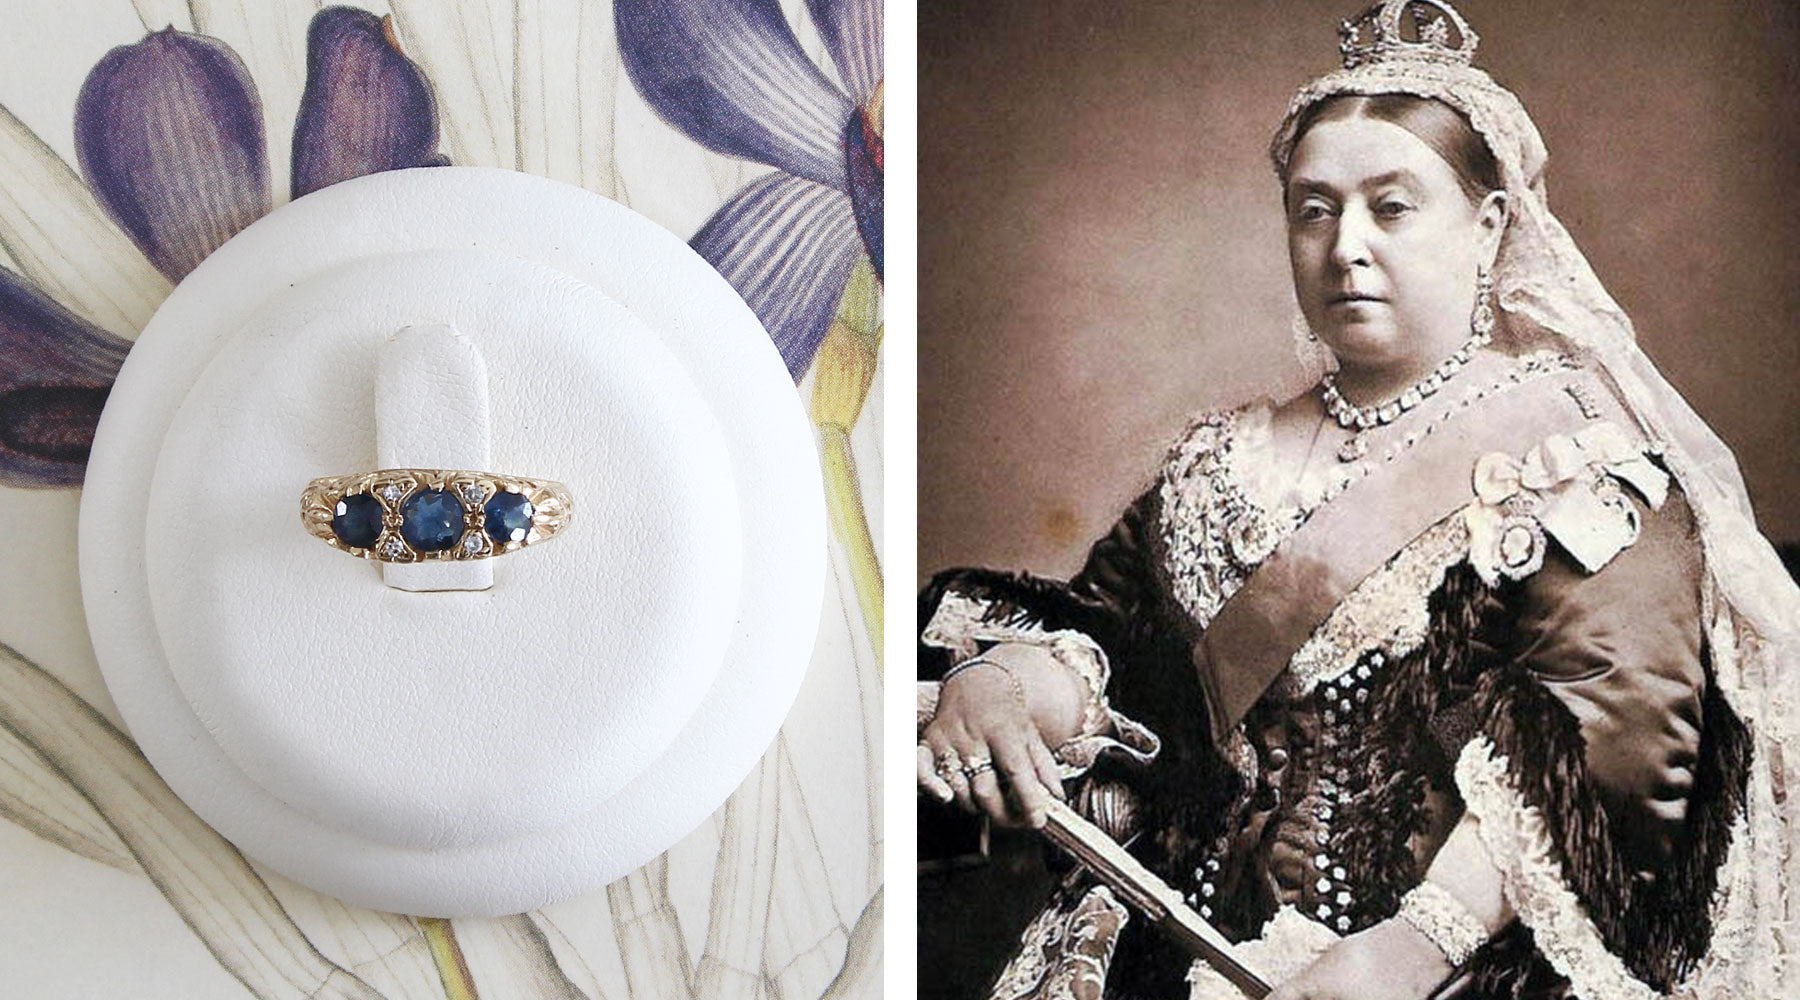 Anabelle Vintage Three Stone Diamond Engagement Ring - artcarvedbridal